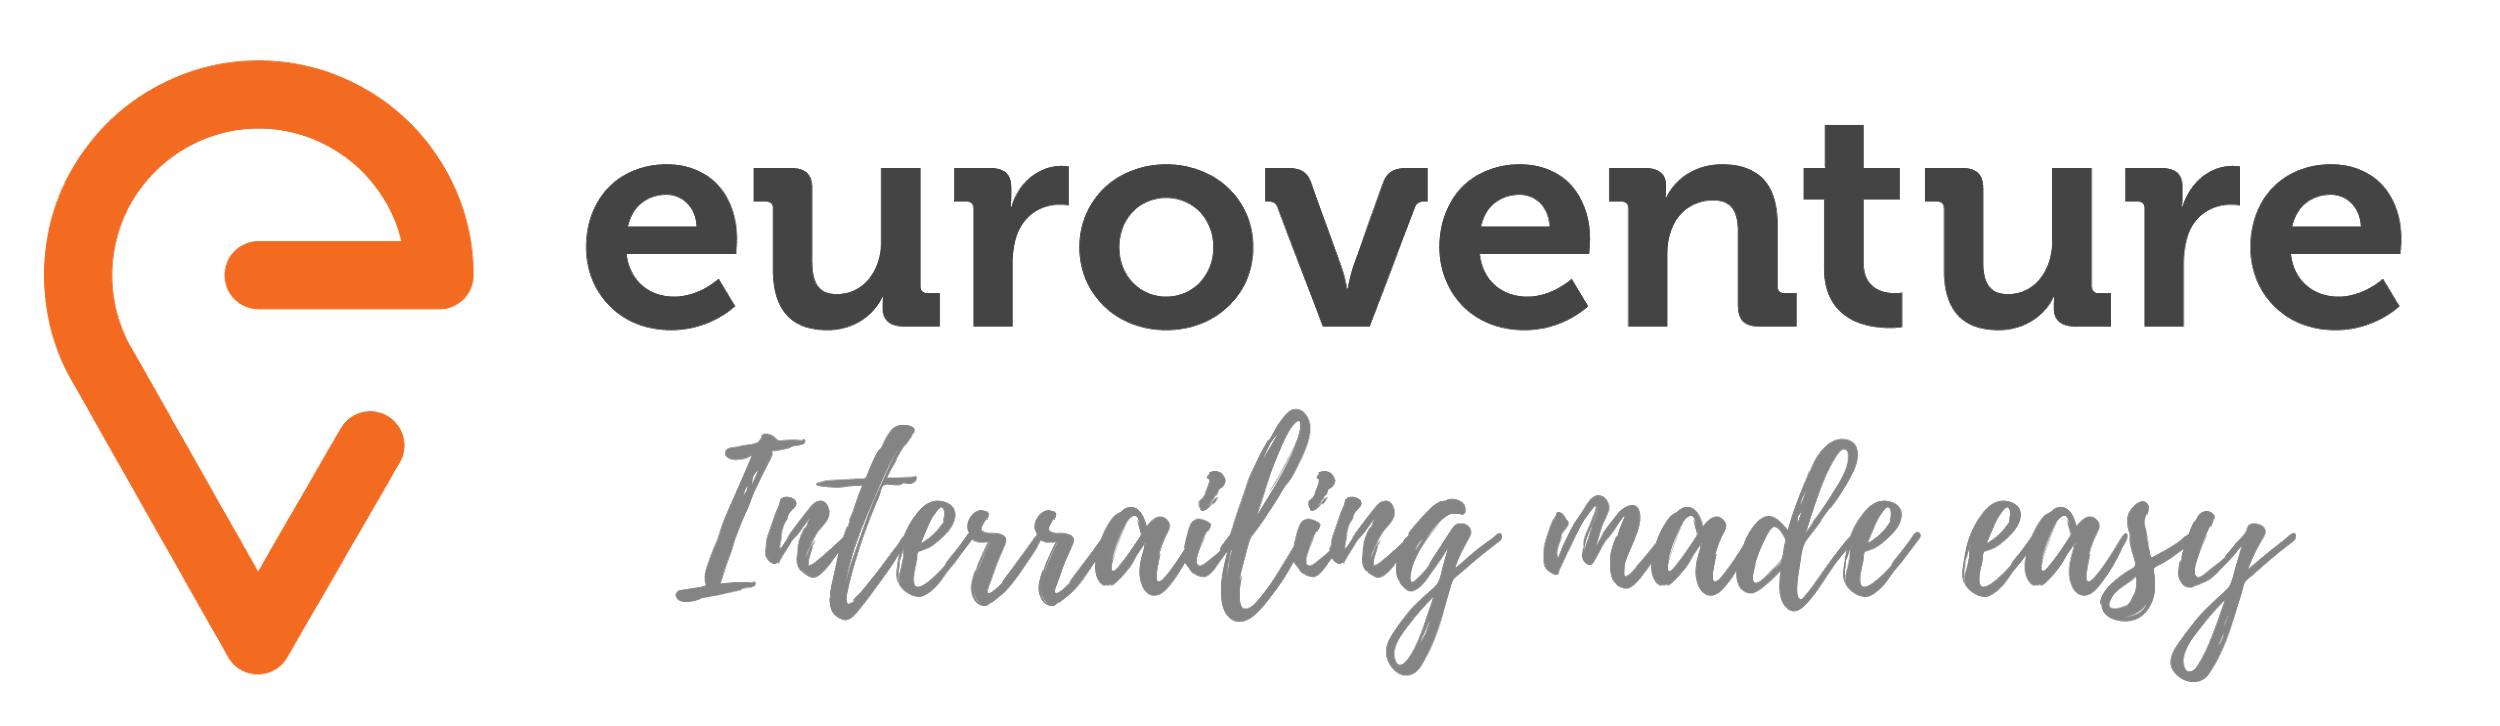 Travel Agency Logo - Euroventure